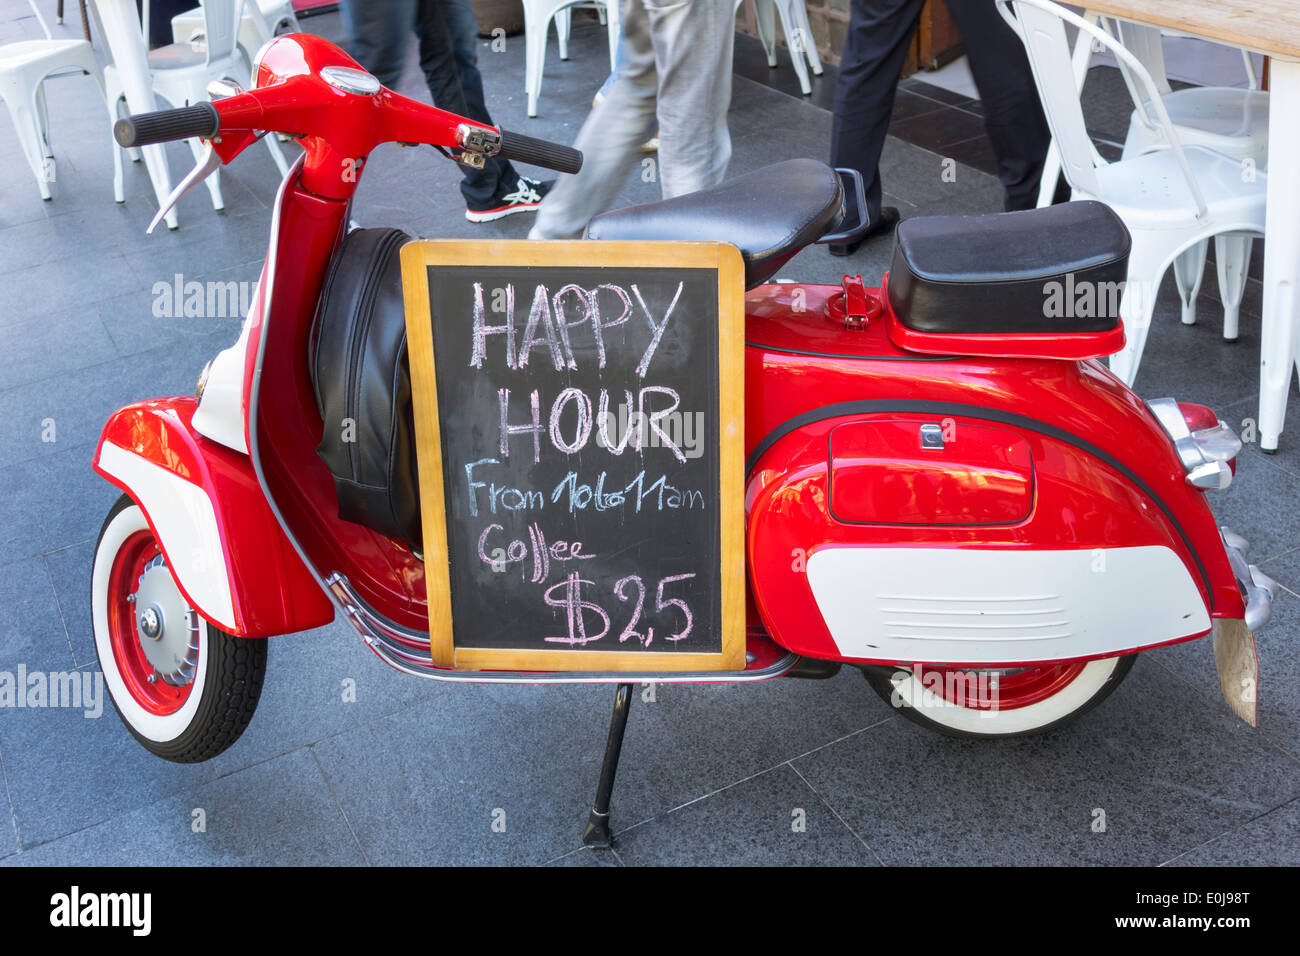 Sydney Australia,Lee Street,Piatto de Pasta,Italian,restaurant restaurants food dining cafe cafes,chalkboard,happy hour,motor scooter,AU140310113 Stock Photo